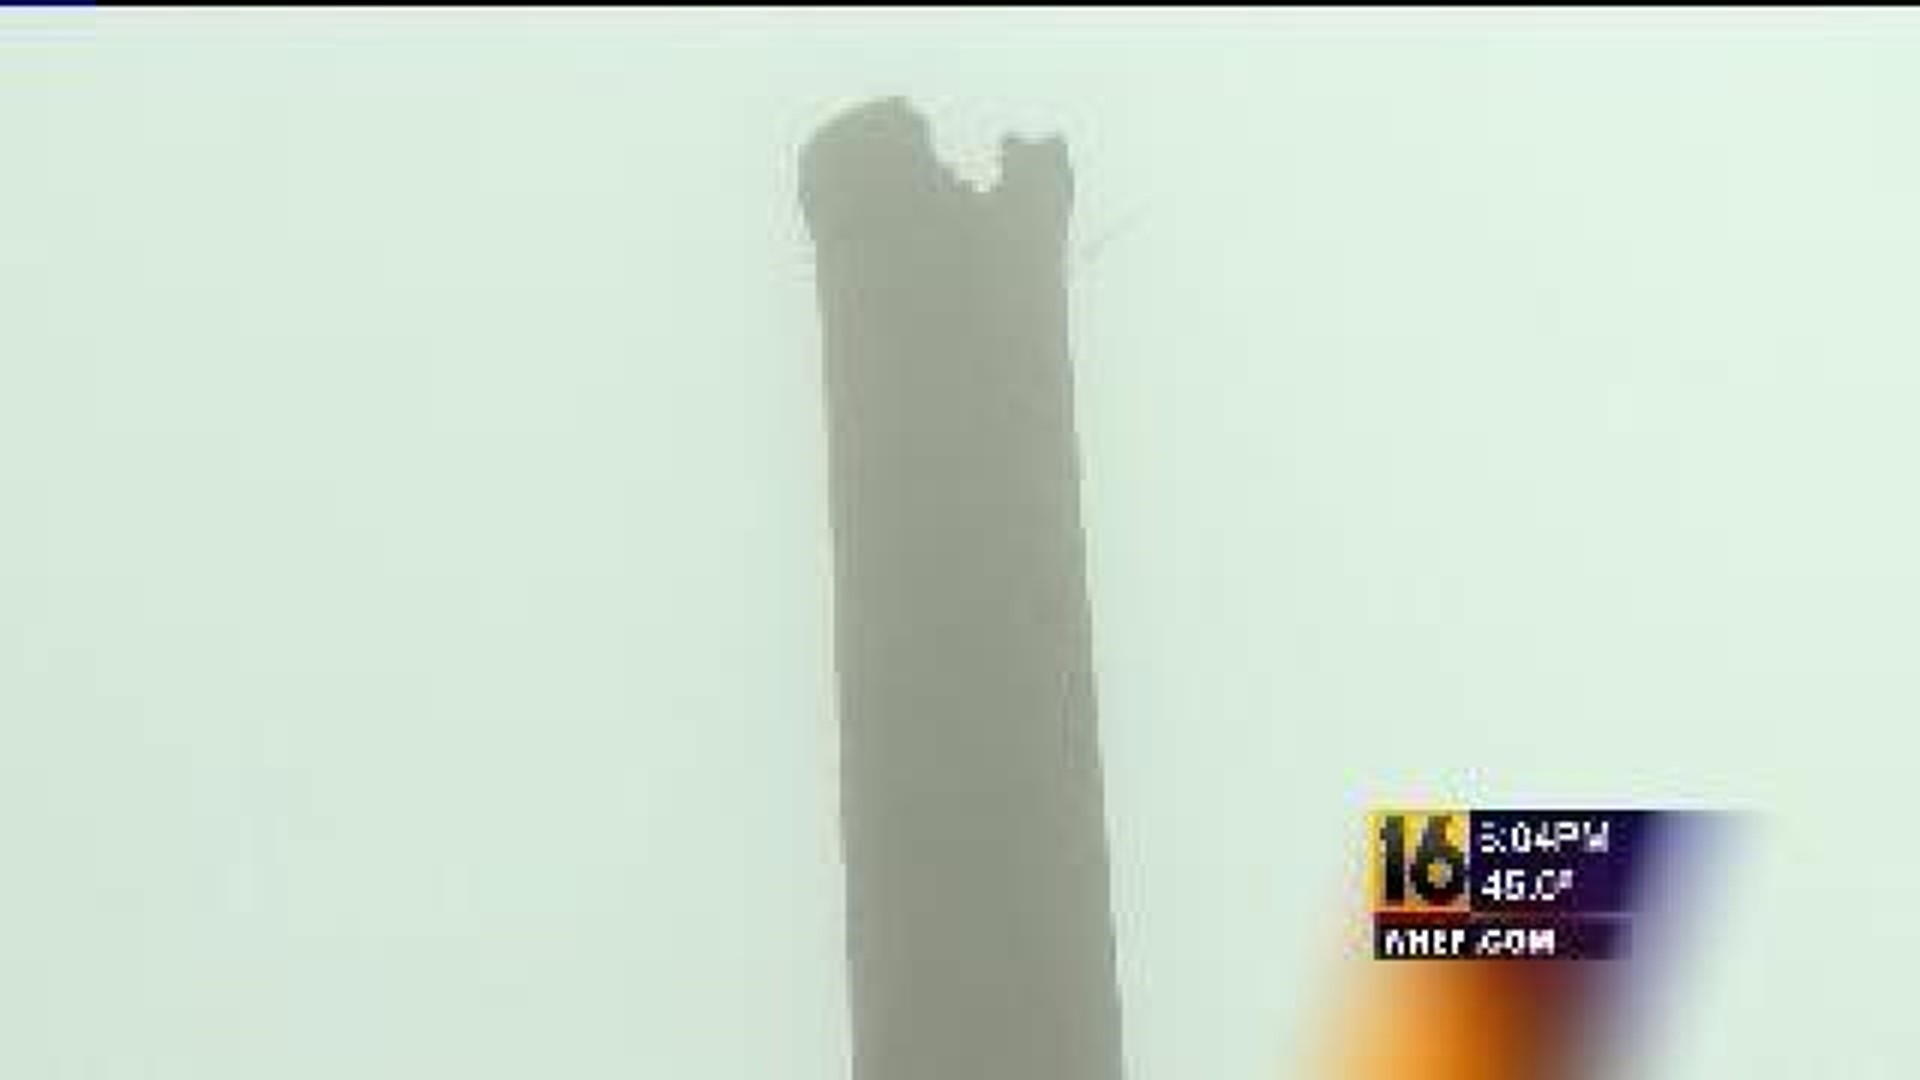 City Officials Fear Crumbling Smokestack